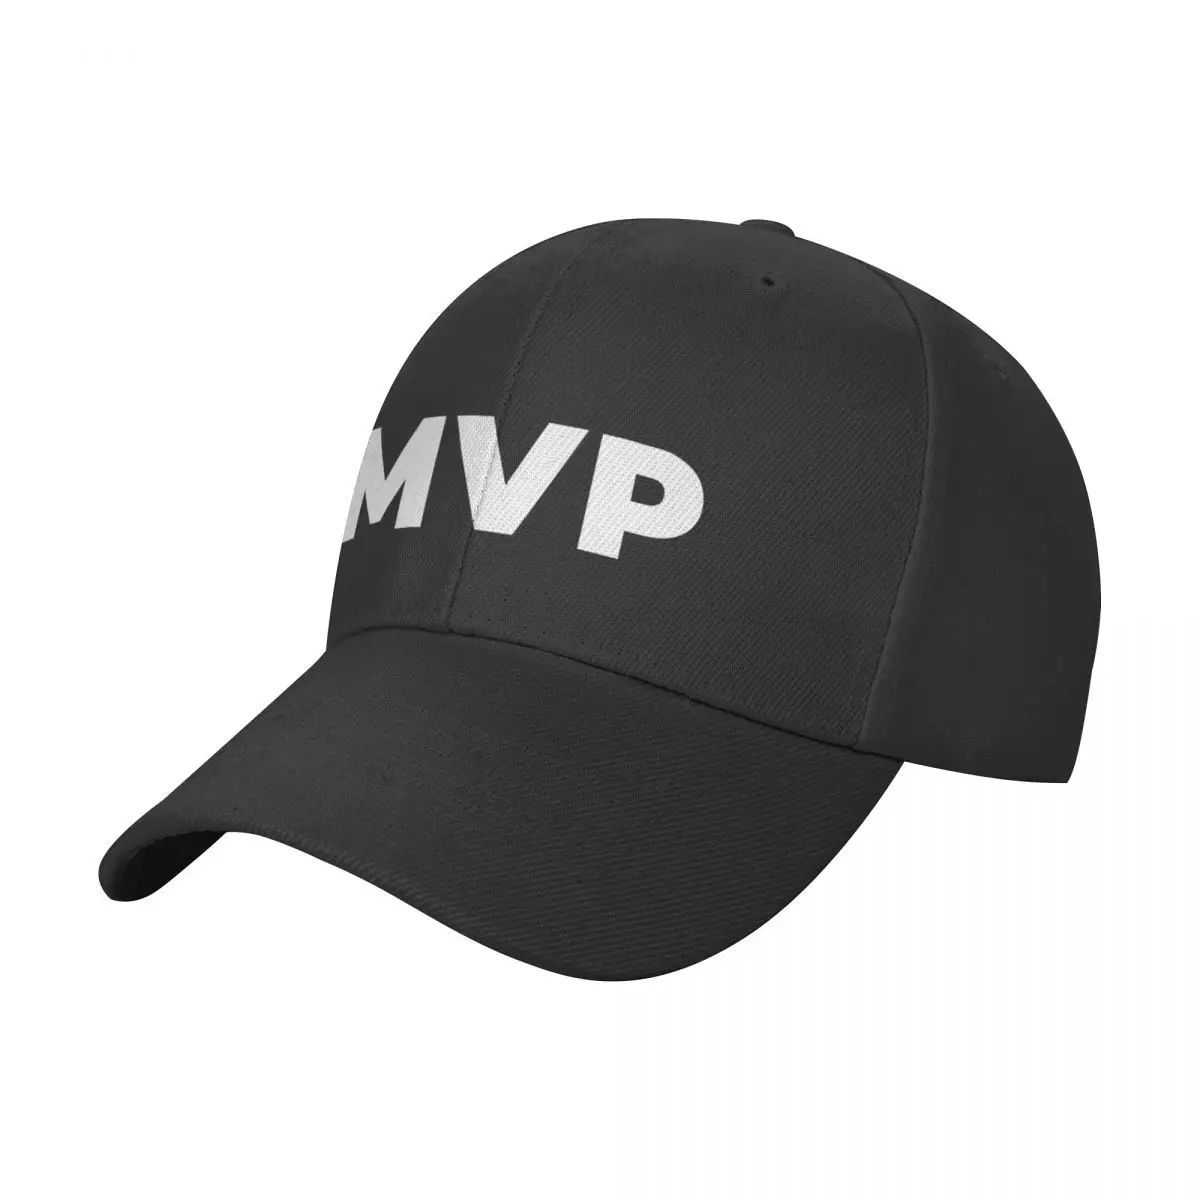 MVP Baseball Cap Big Size Hat New Hat Hat Female Men's baseball cap let s go brandon trump 2024 fjb hat adjustable hat joe biden one size 2 style